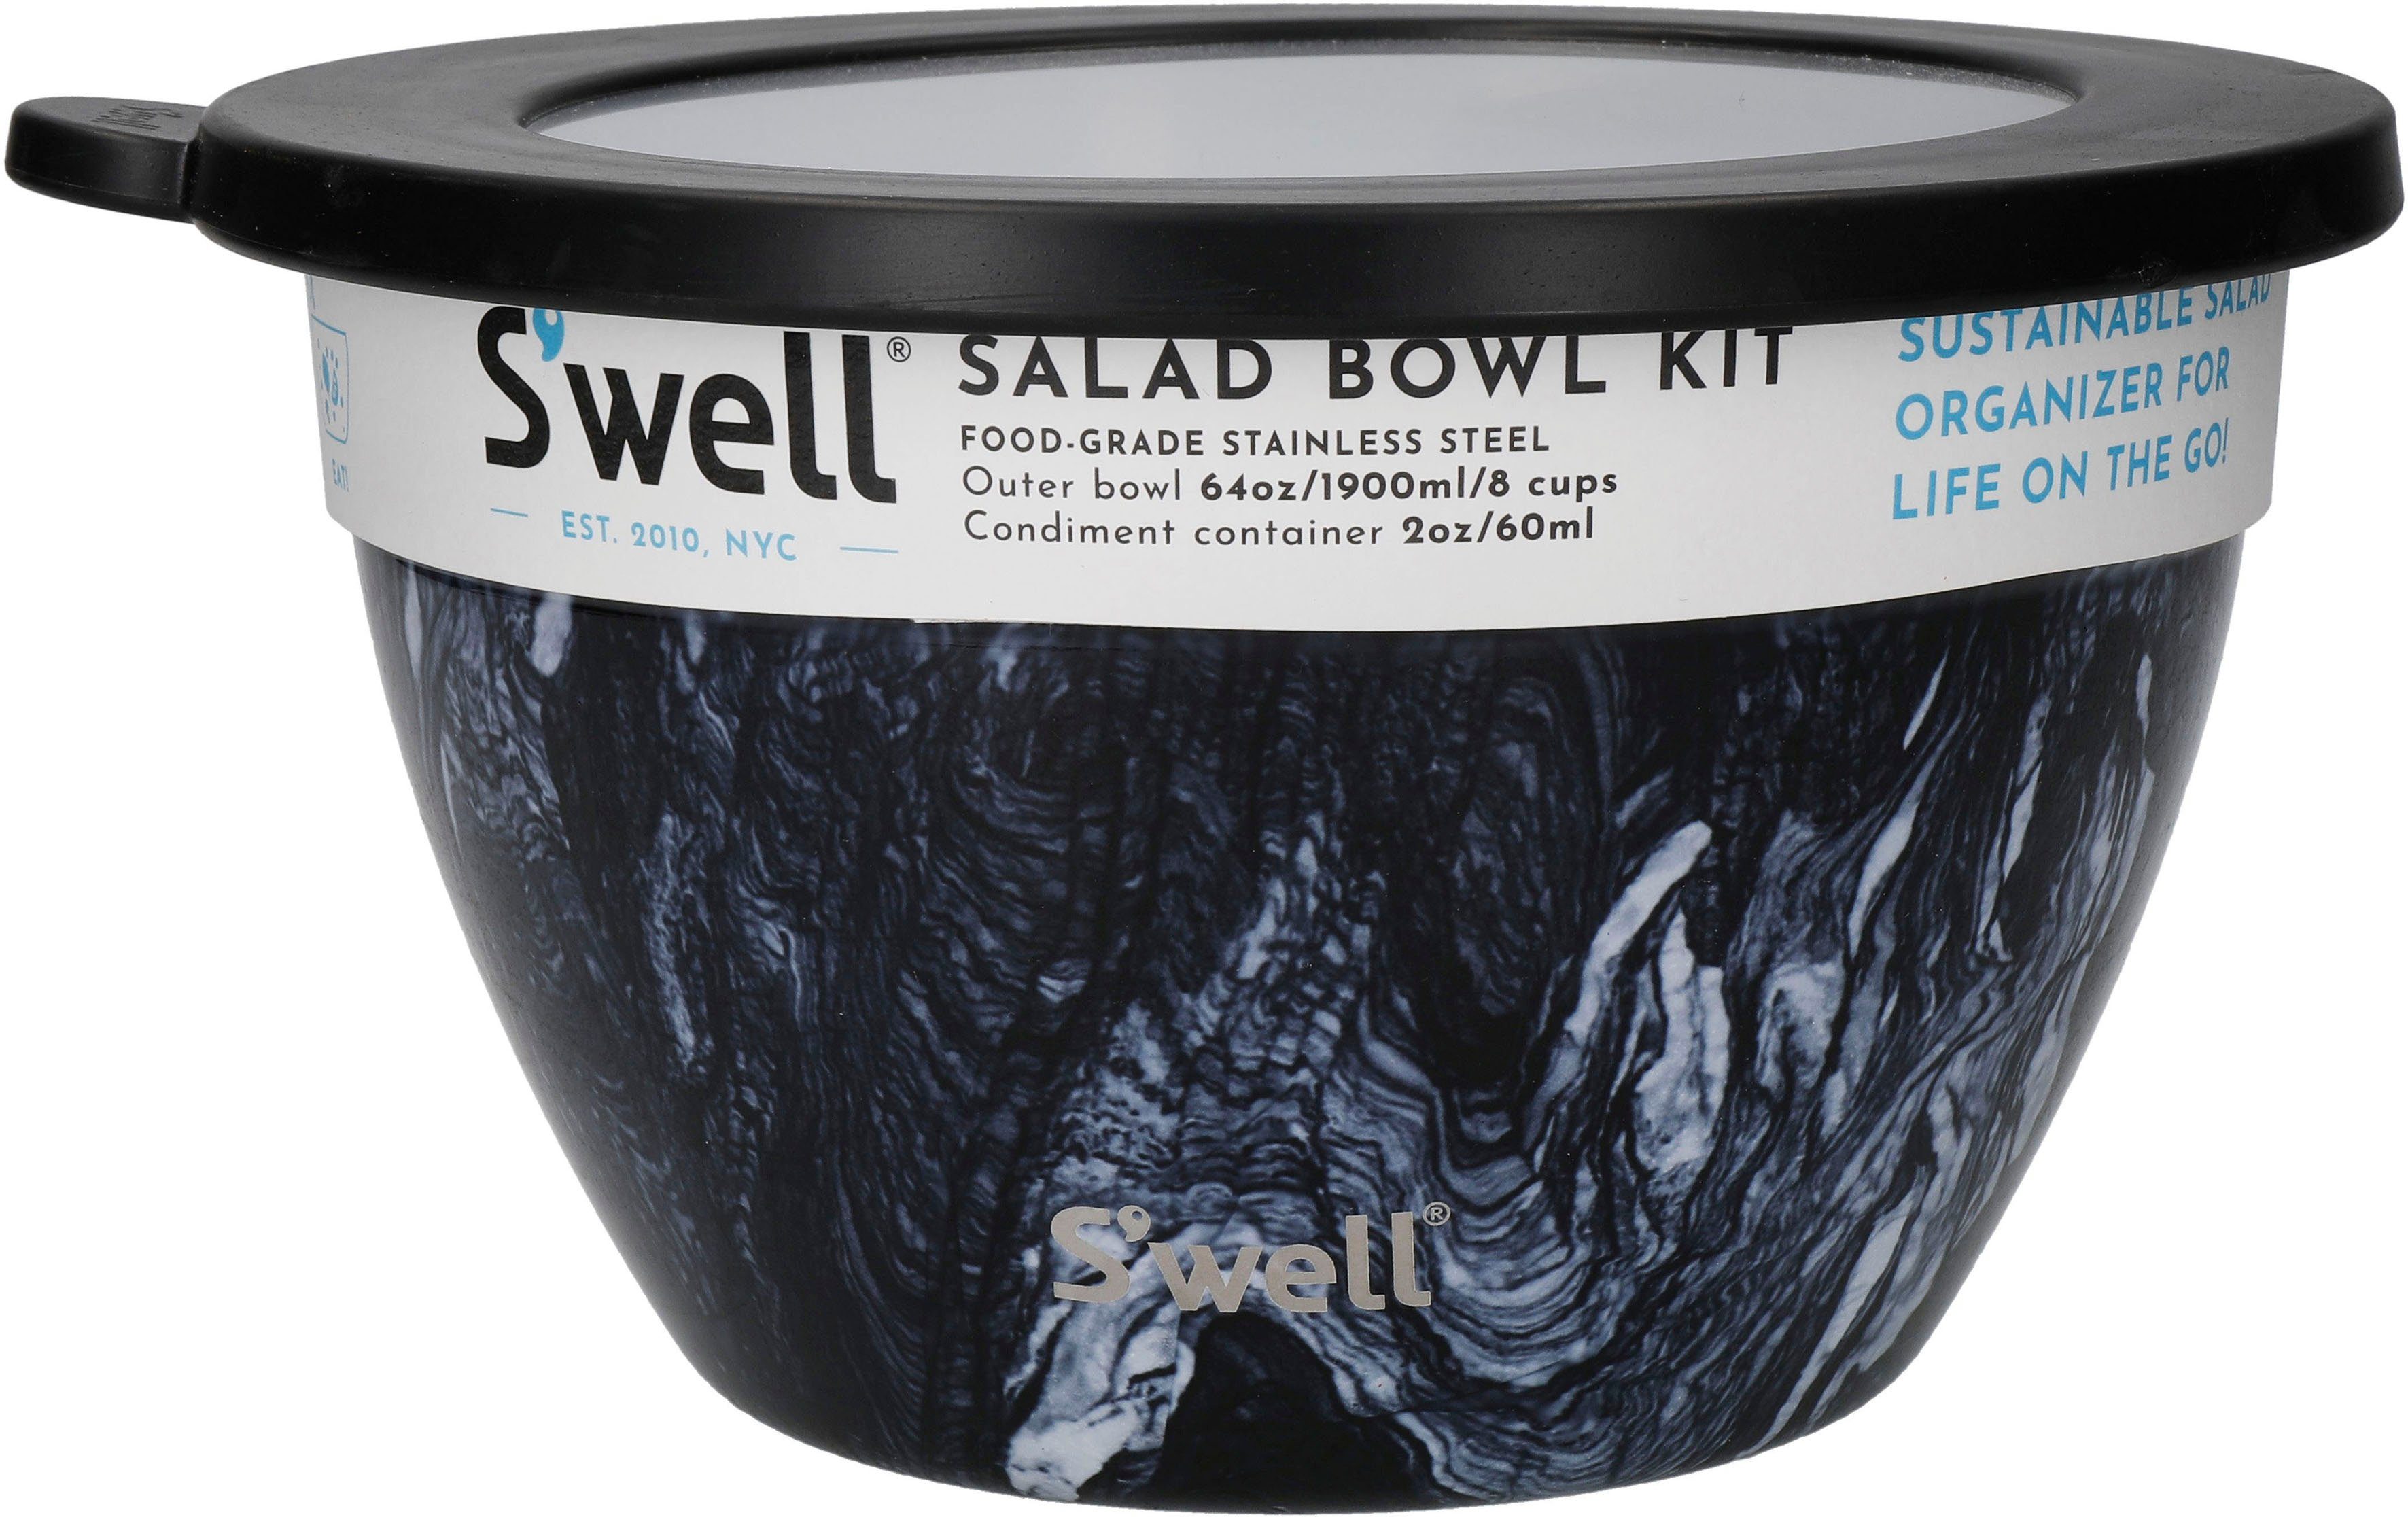 (3-tlg), Kit, Außenschale Azurit-Marmor S'well S'well Onyx Therma-S'well®-Technologie, vakuumisolierten Salatschüssel Bowl Edelstahl, 1.9L, Salad